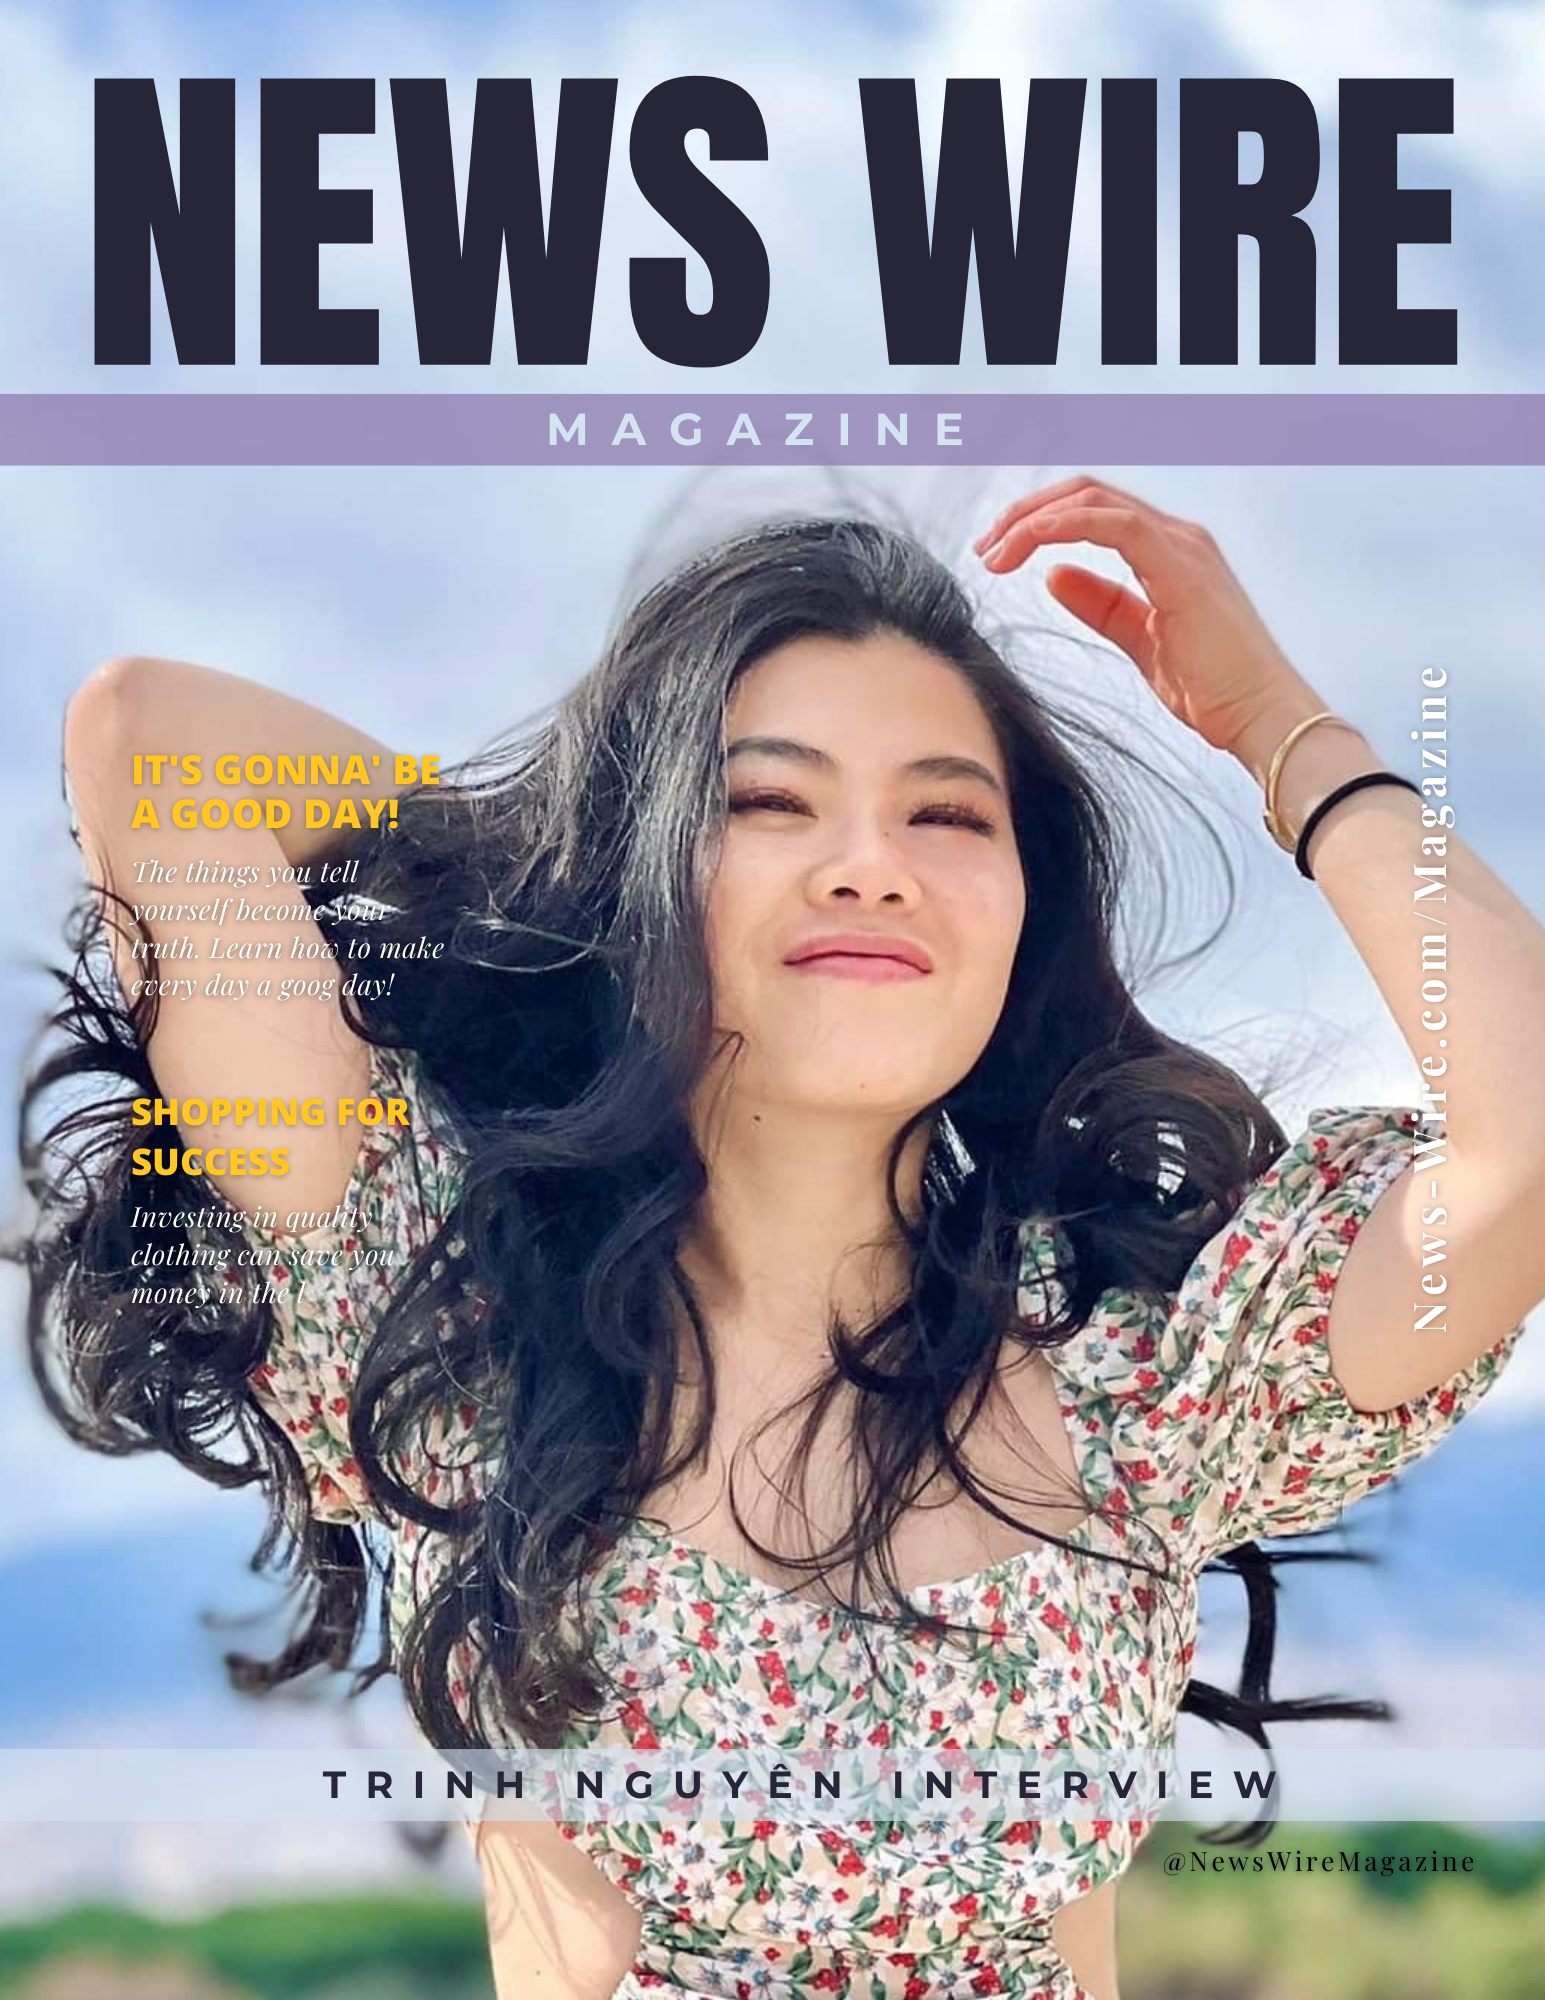 Trinh Nguyên Interview in News Wire Magazine